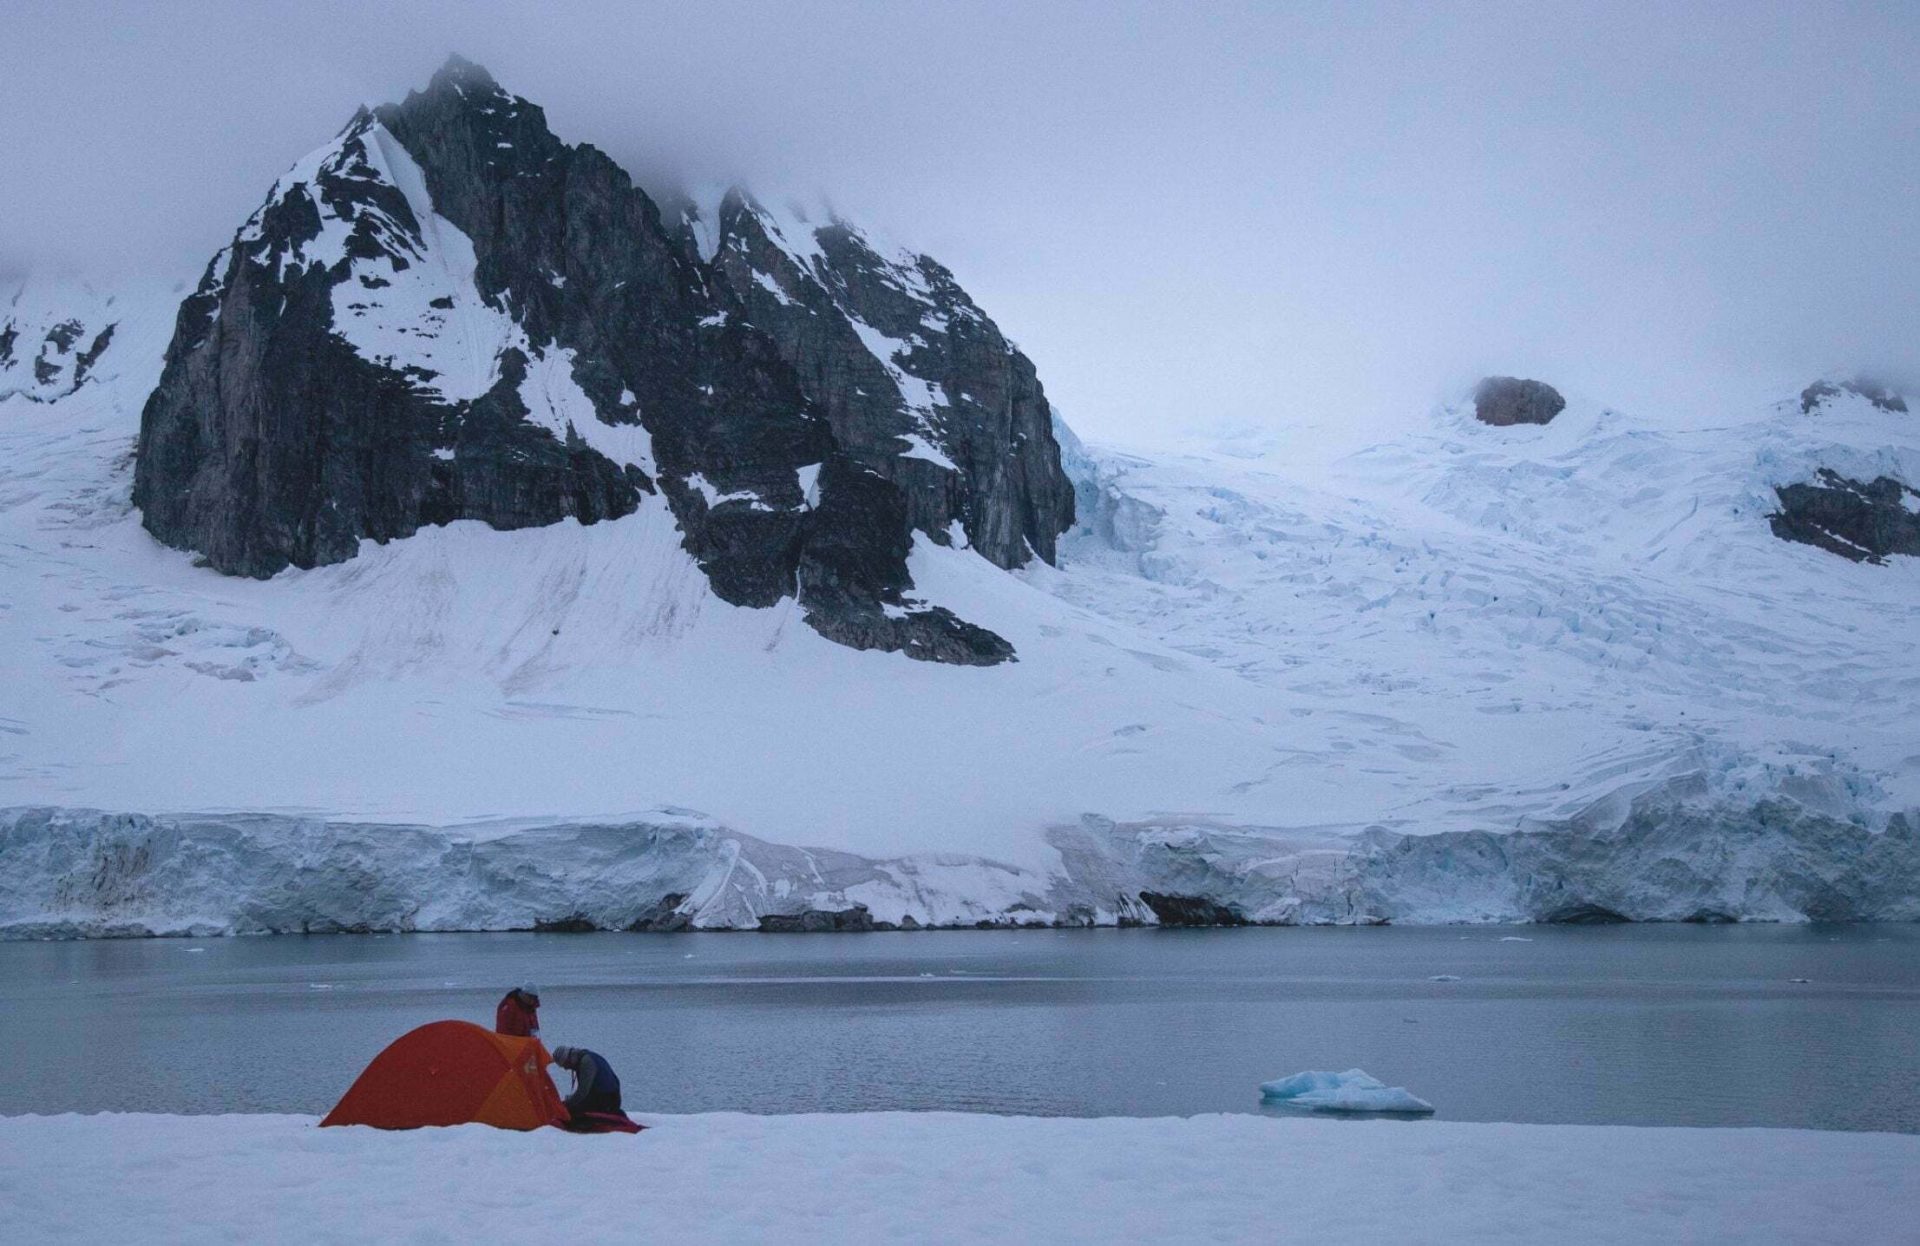 Antarctic camping